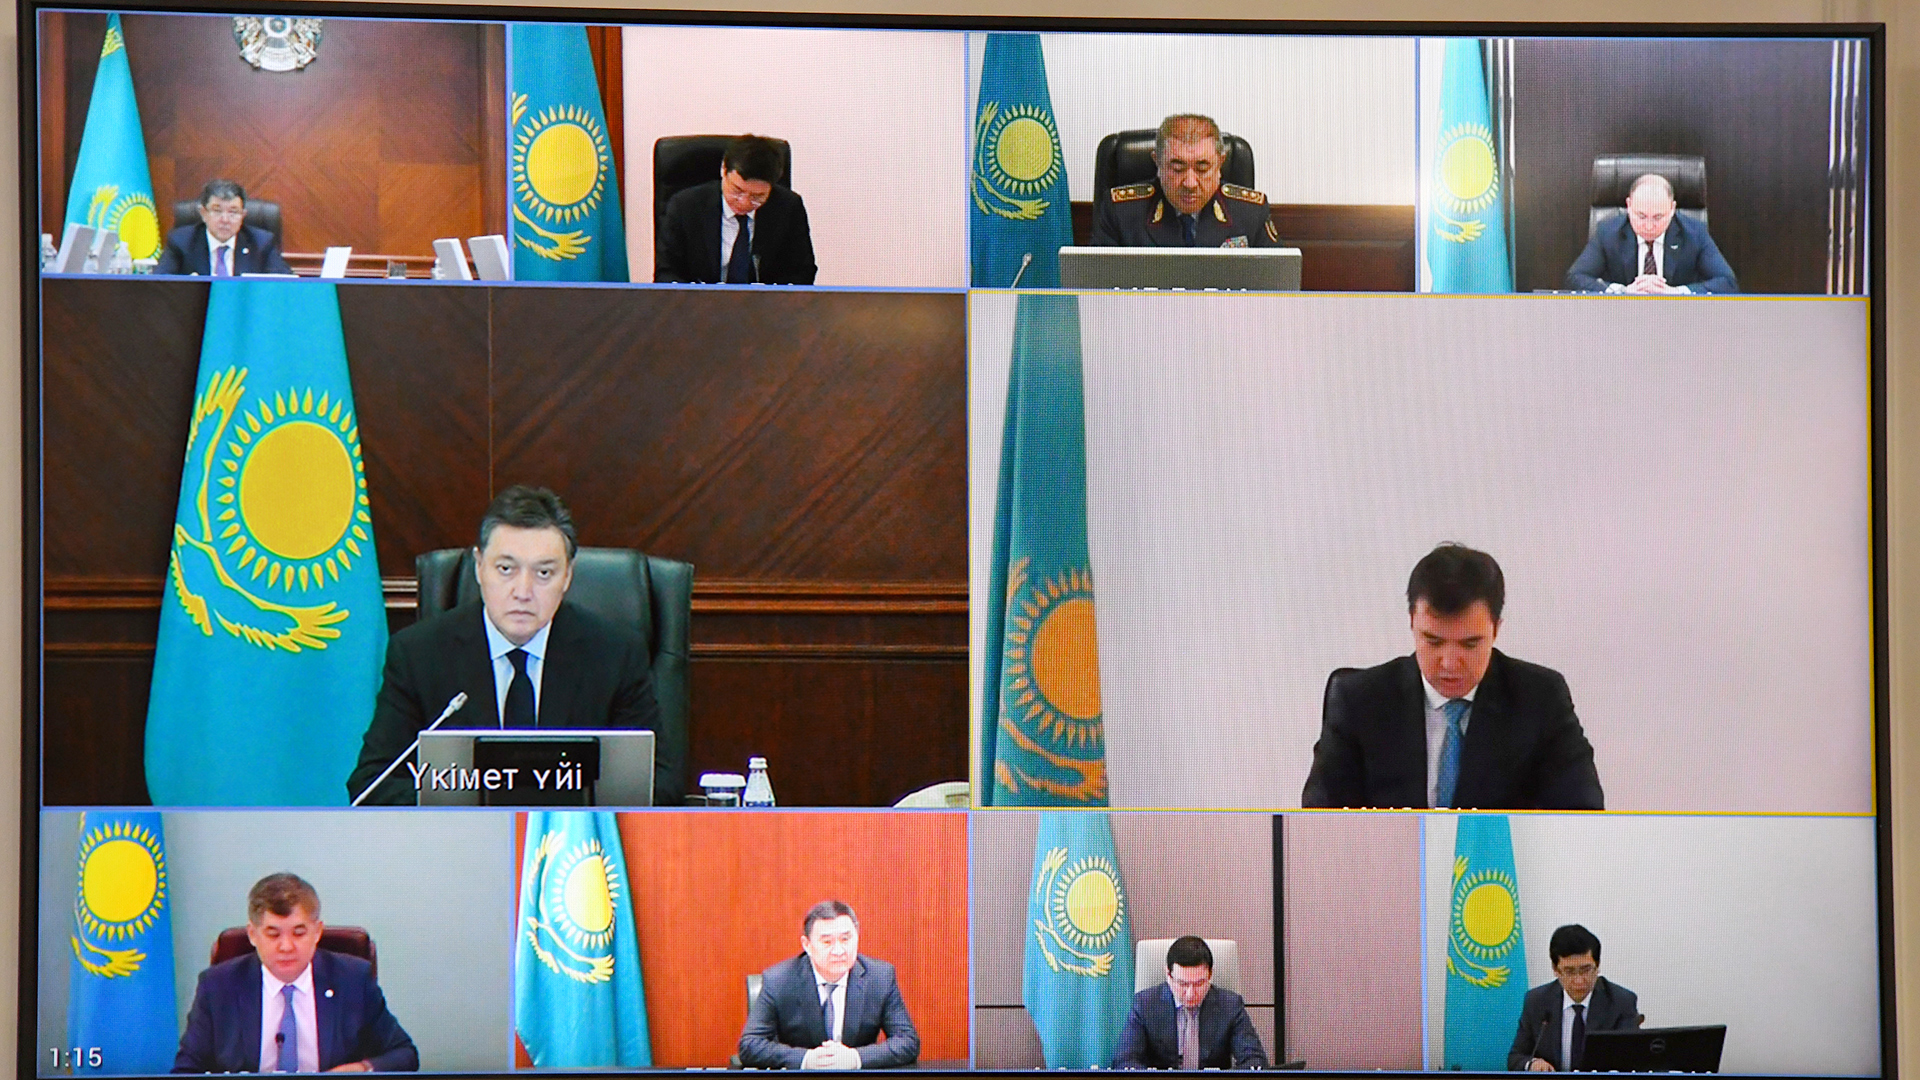 Askar Mamin: Kazakhstan’s economic growth for first quarter of 2020 was 2.7%